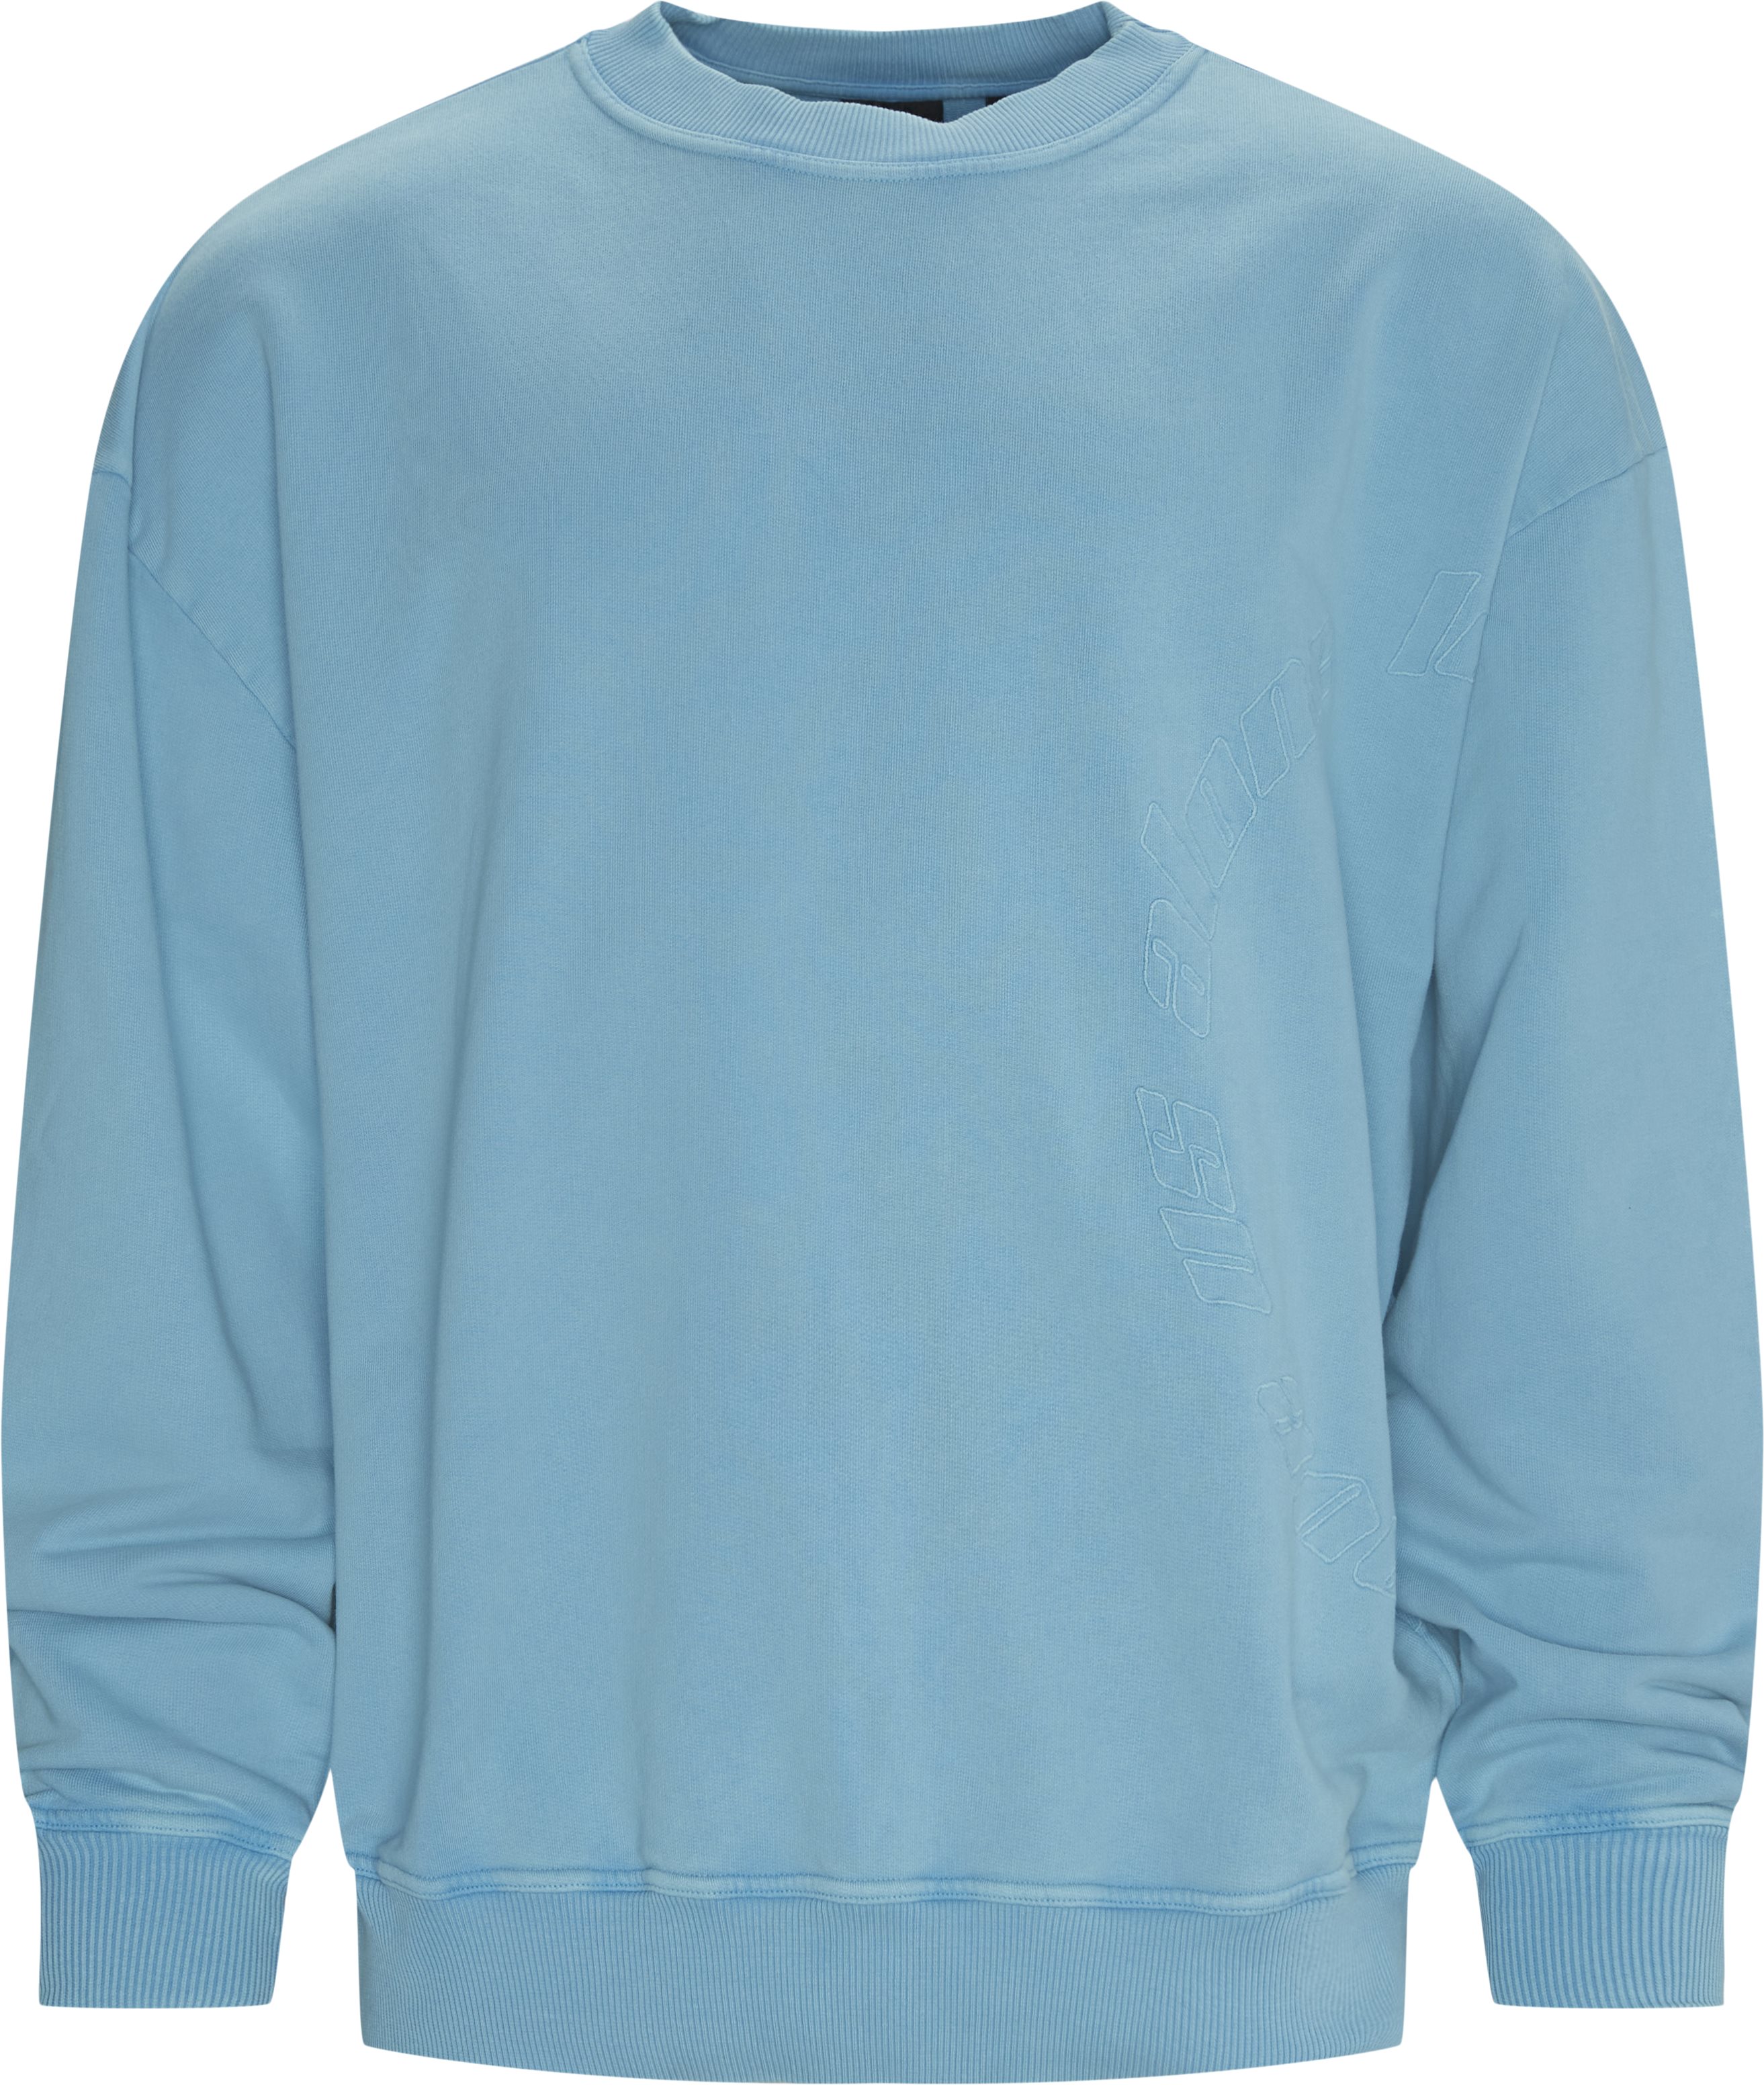 Kerspla Sweatshirt - Sweatshirts - Regular fit - Blå